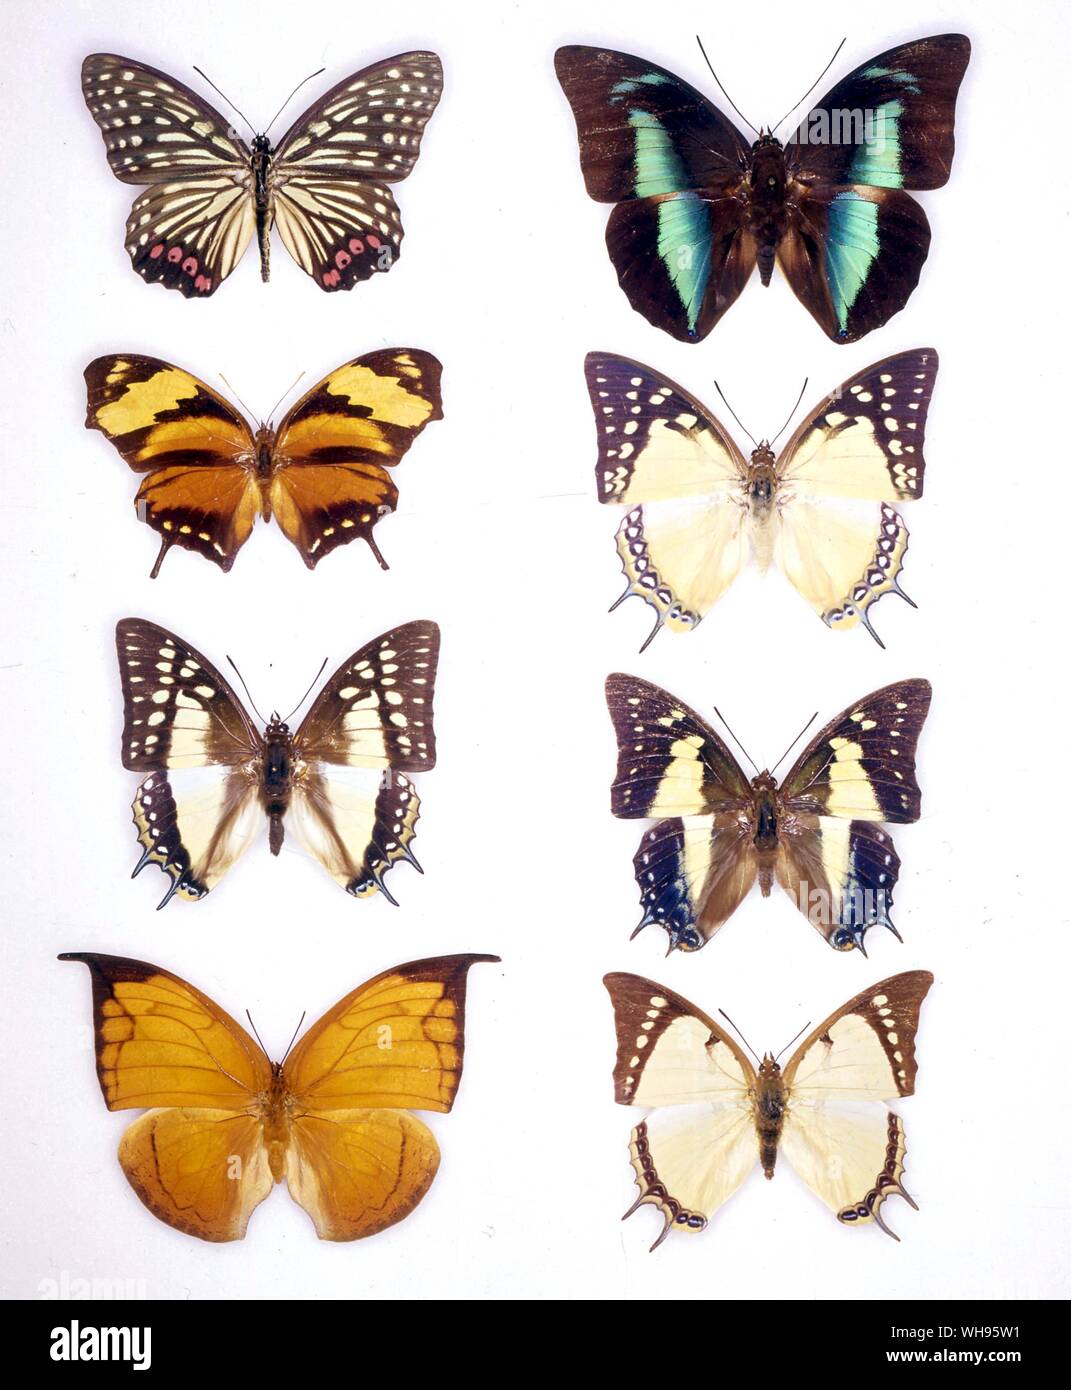 Papillons papillons/- (de gauche à droite) Hestinalis assimilis, Prepona méandre, Consul hippona Polyura, eudamippus (femelle), eudamippus Polyura (femelle), pyrrhus, Polyura Coenophlebia archidona, Polyura dolon Banque D'Images